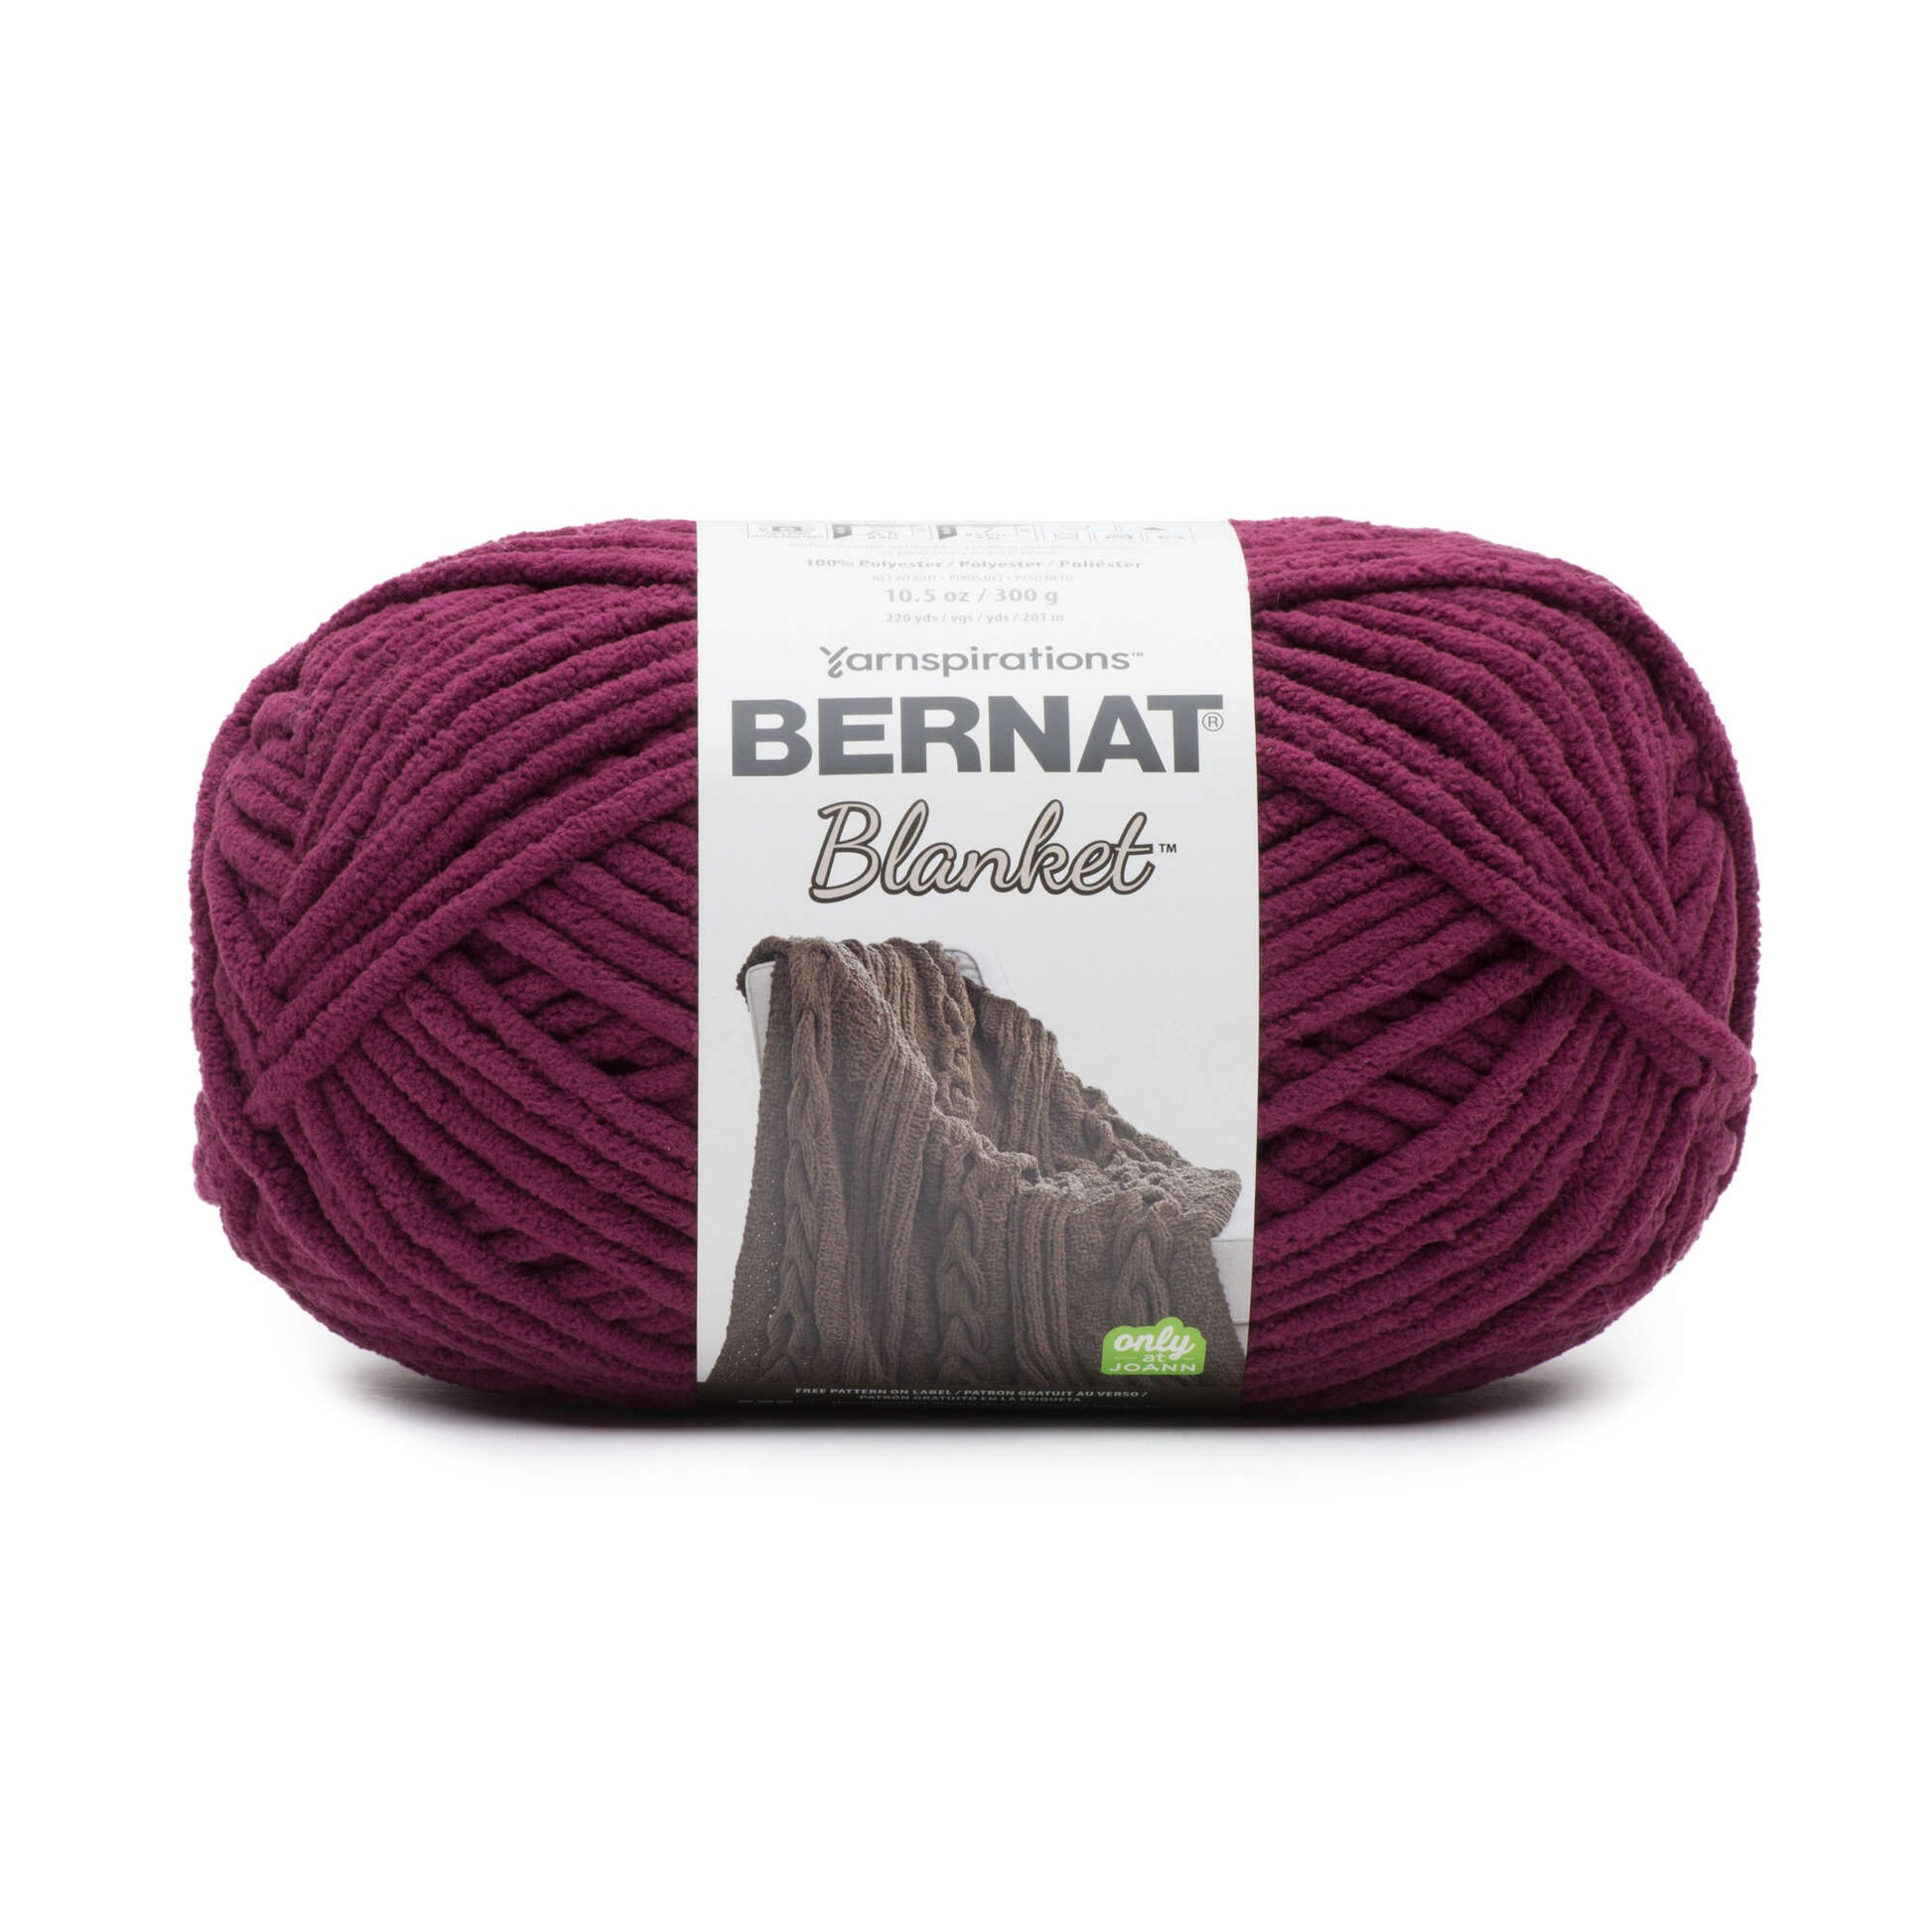 Bernat Blanket Yarn (300g/10.5oz) Burgundy Plum